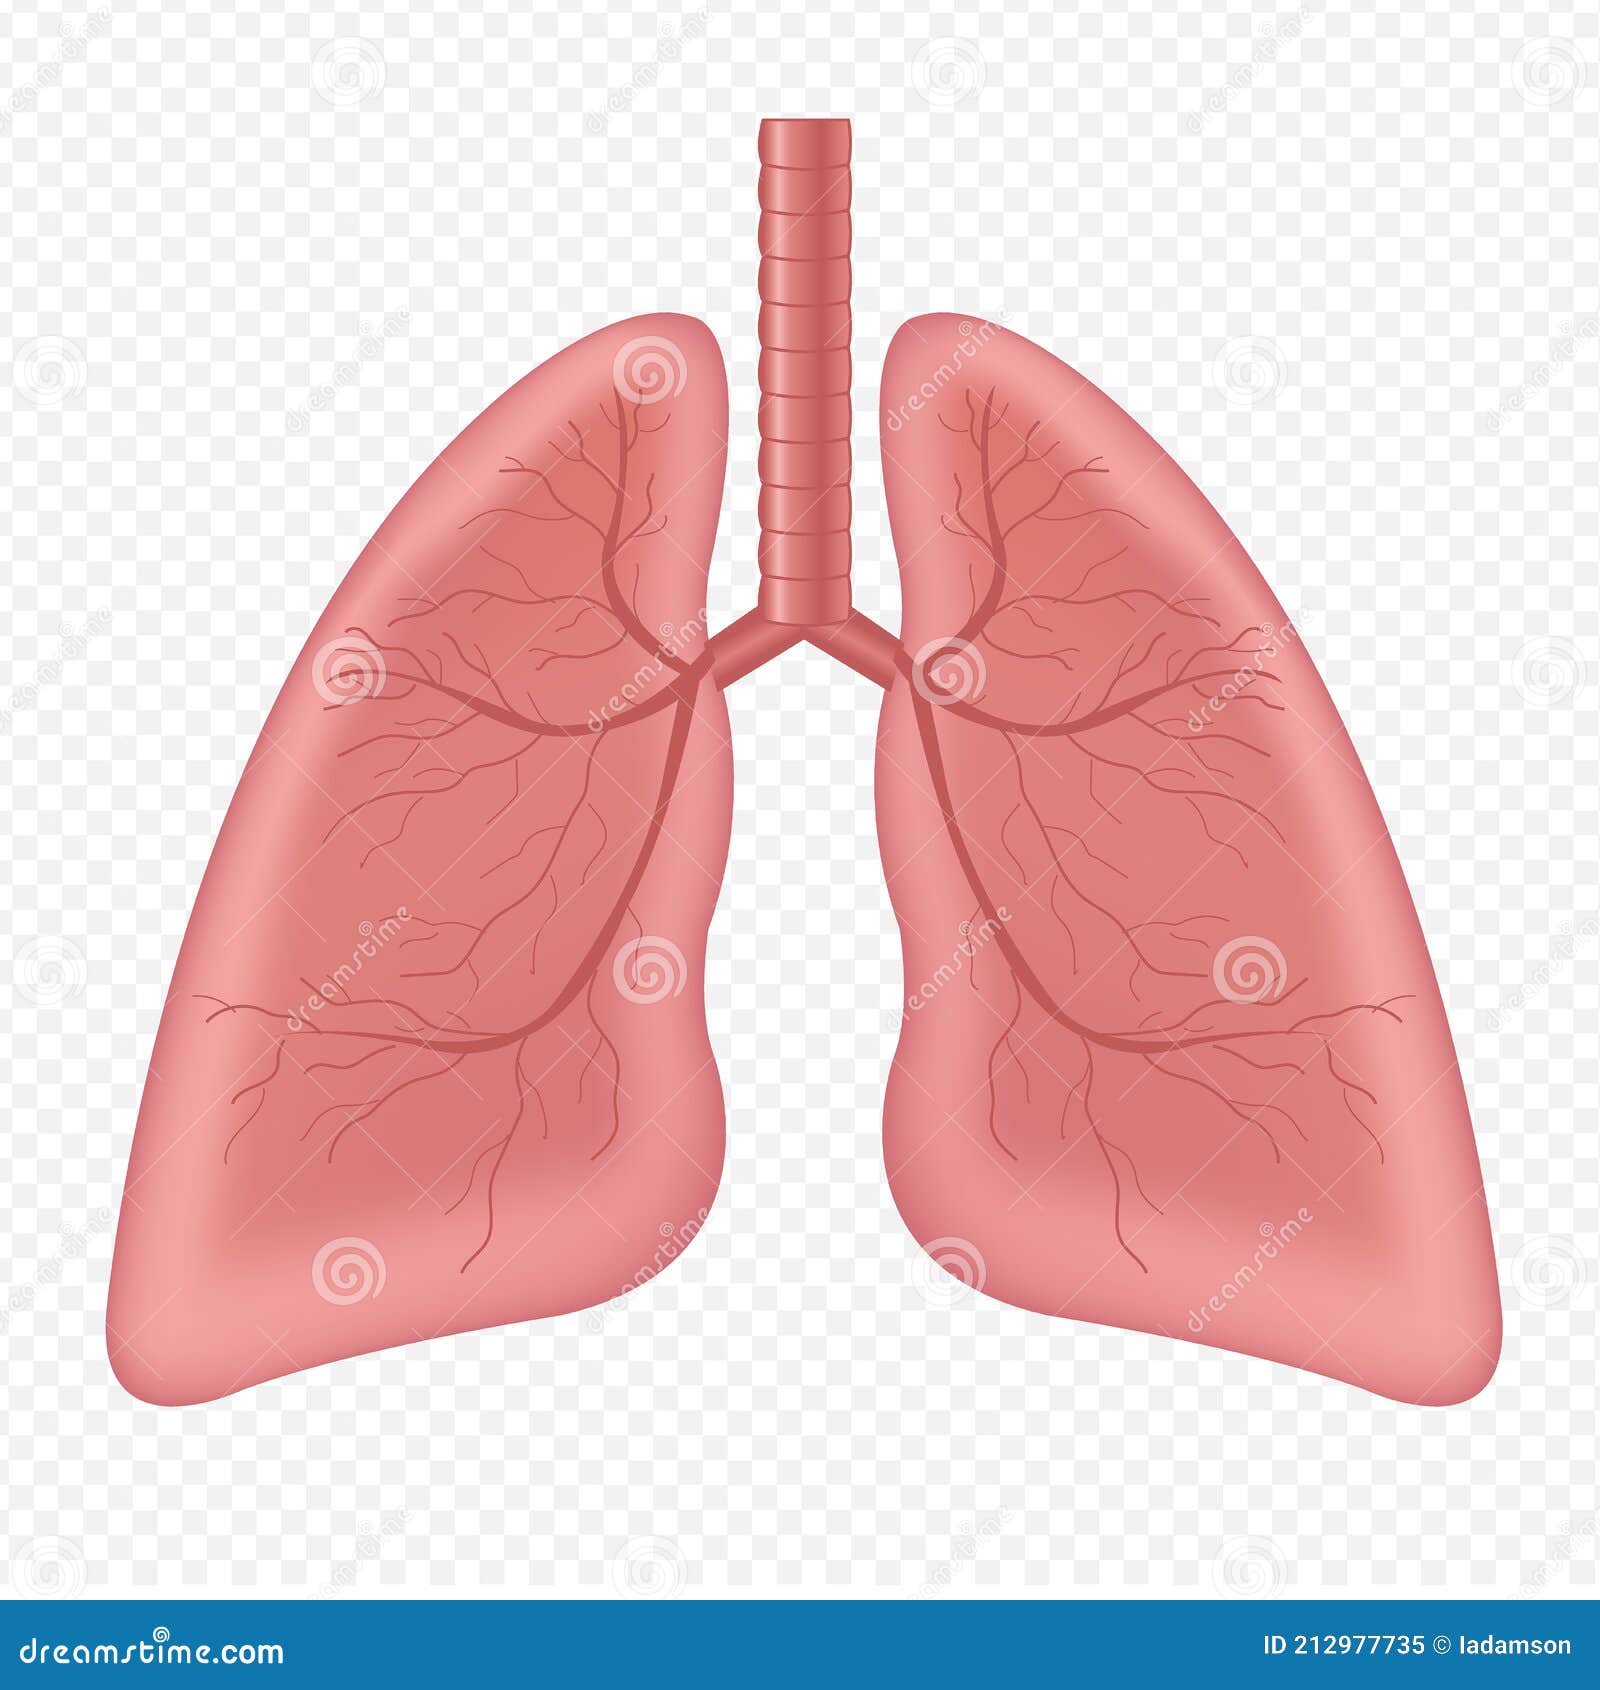 lungs human internal organ  white background